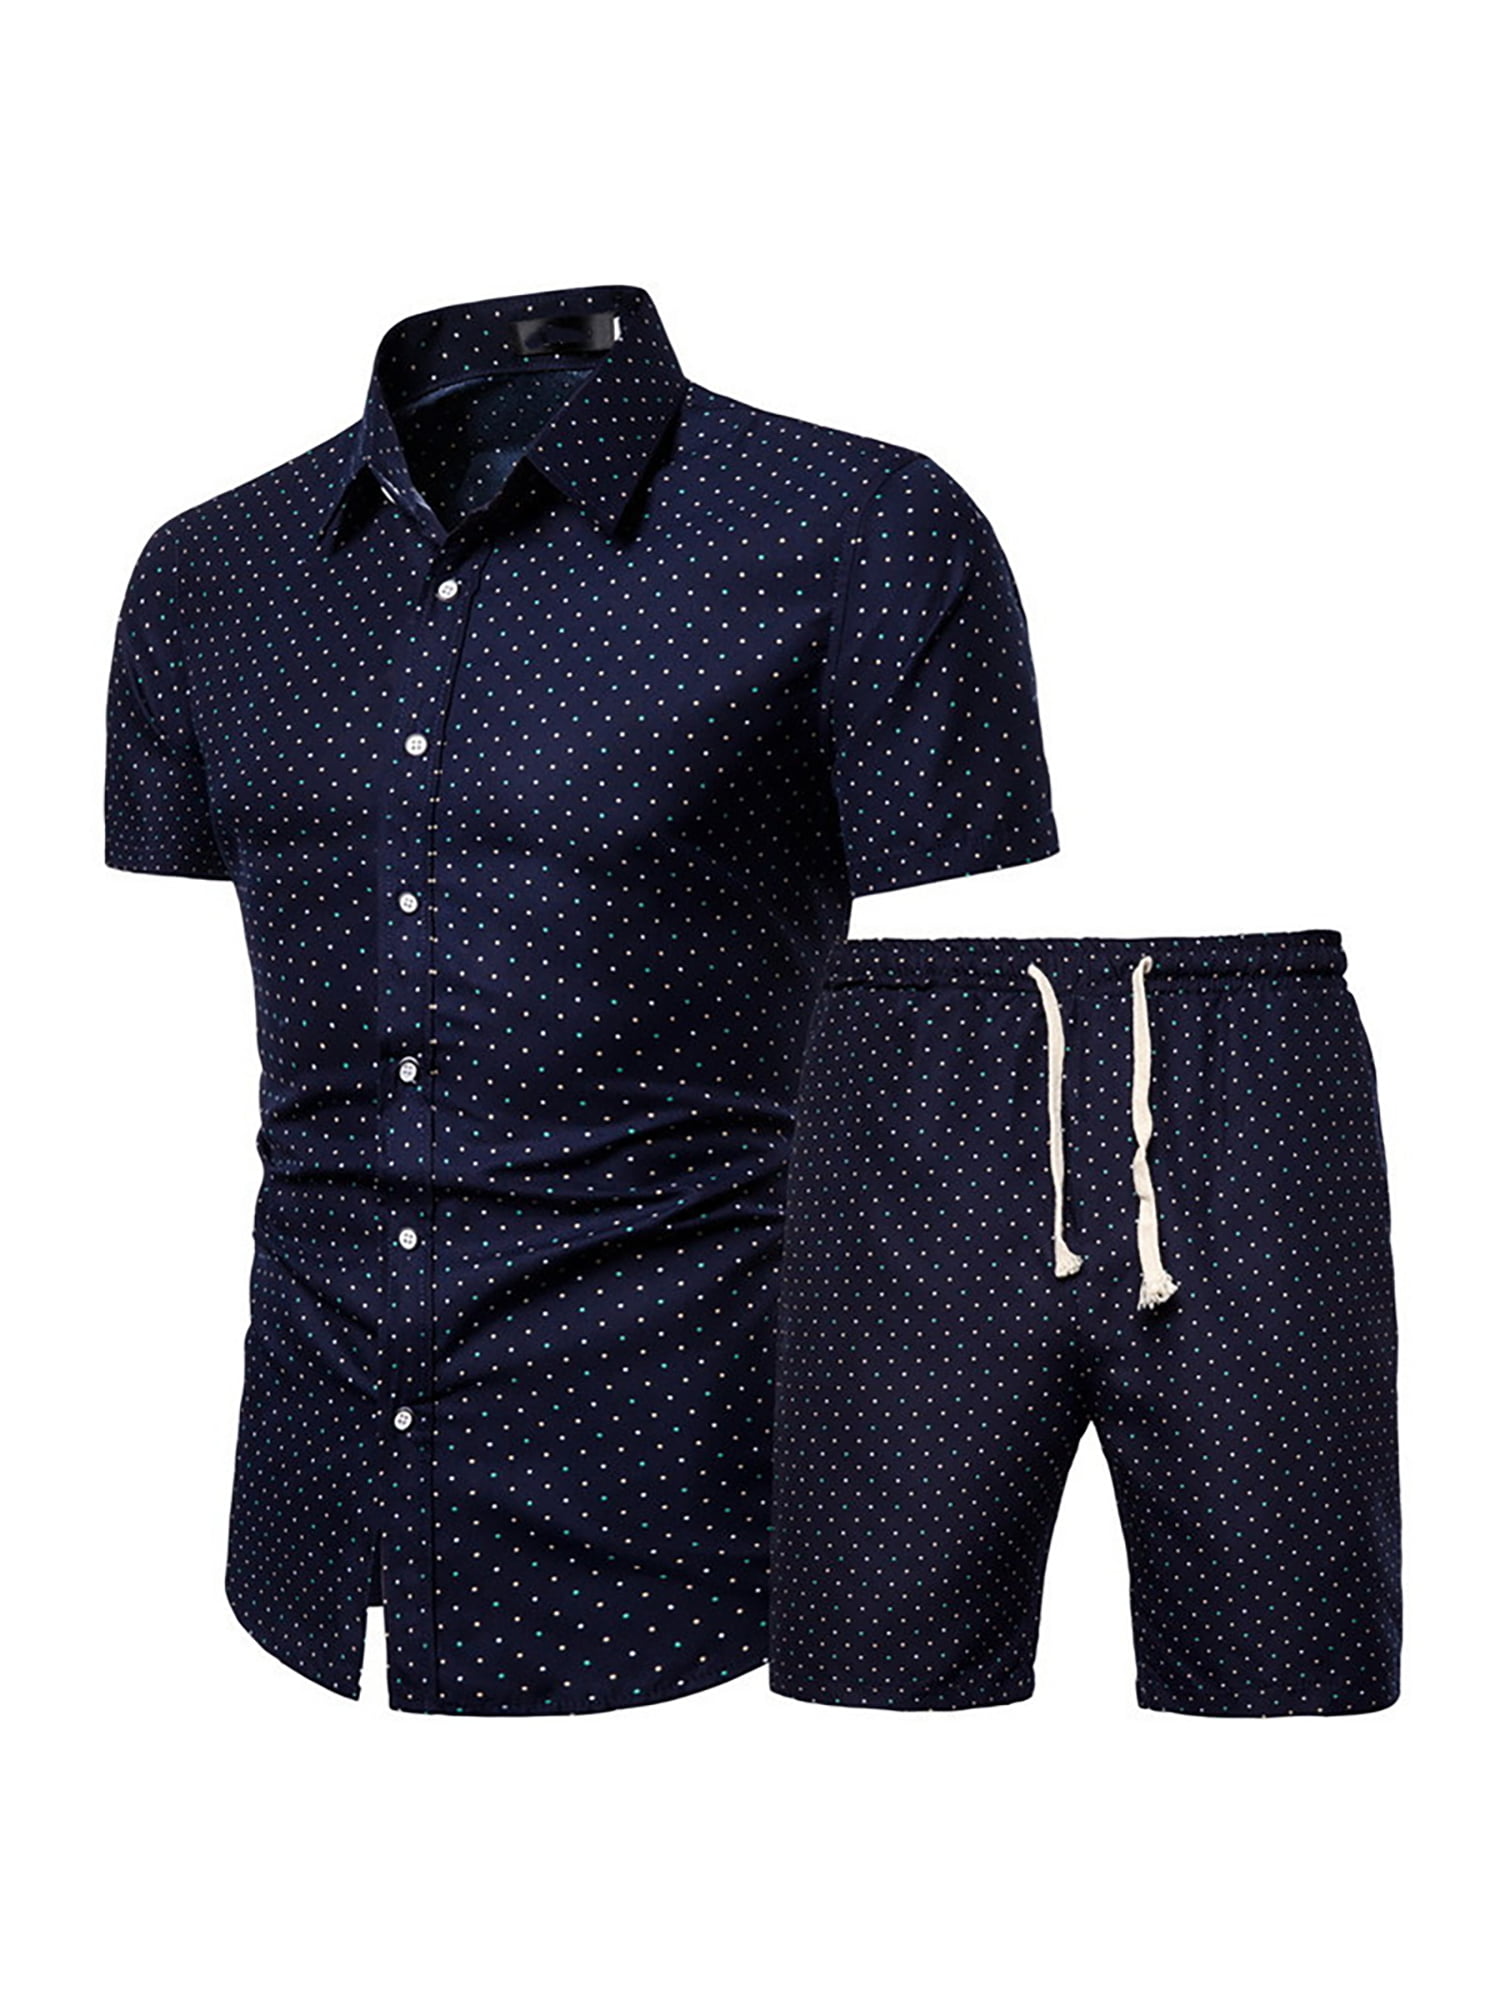 Mens Loungewear Set Summer,NEWONESUN 2 Piece Short Sleeve Cotton Outfit Lightweight Track Suit Sleepwear Plus Size